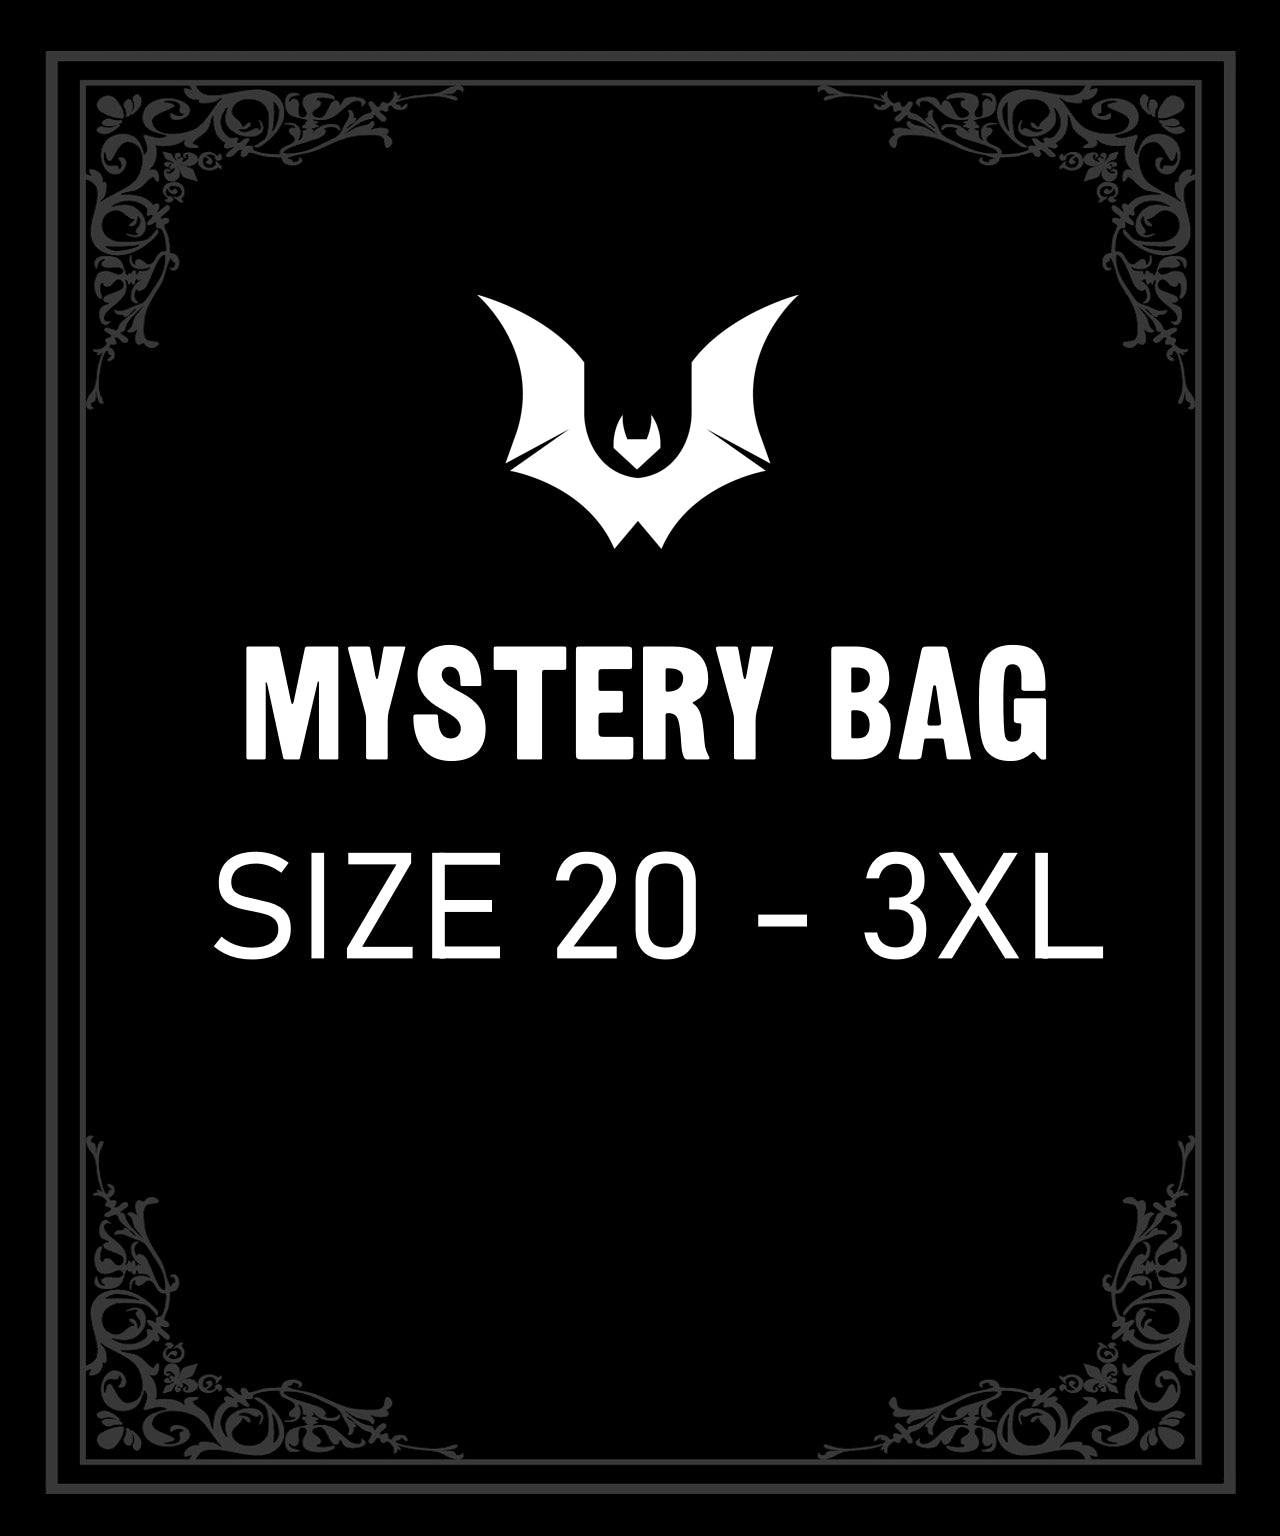 3XL Mystery Bag